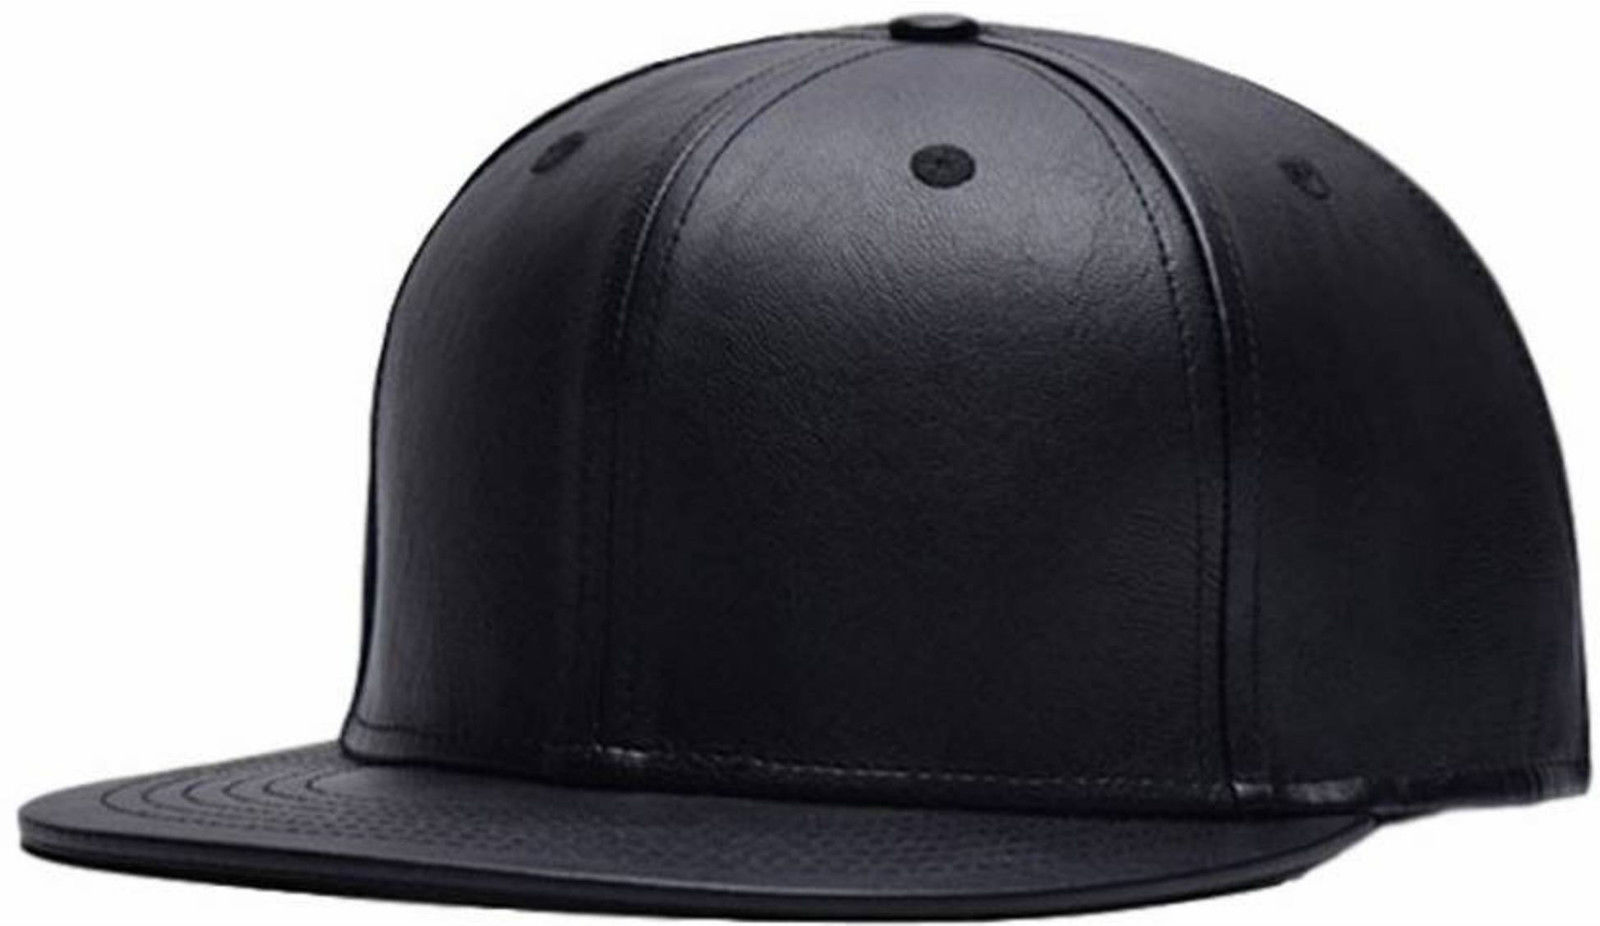 MOCOMO Leather Hiphop Cap Solid Black Cap Hat For Men Women Boys Girls